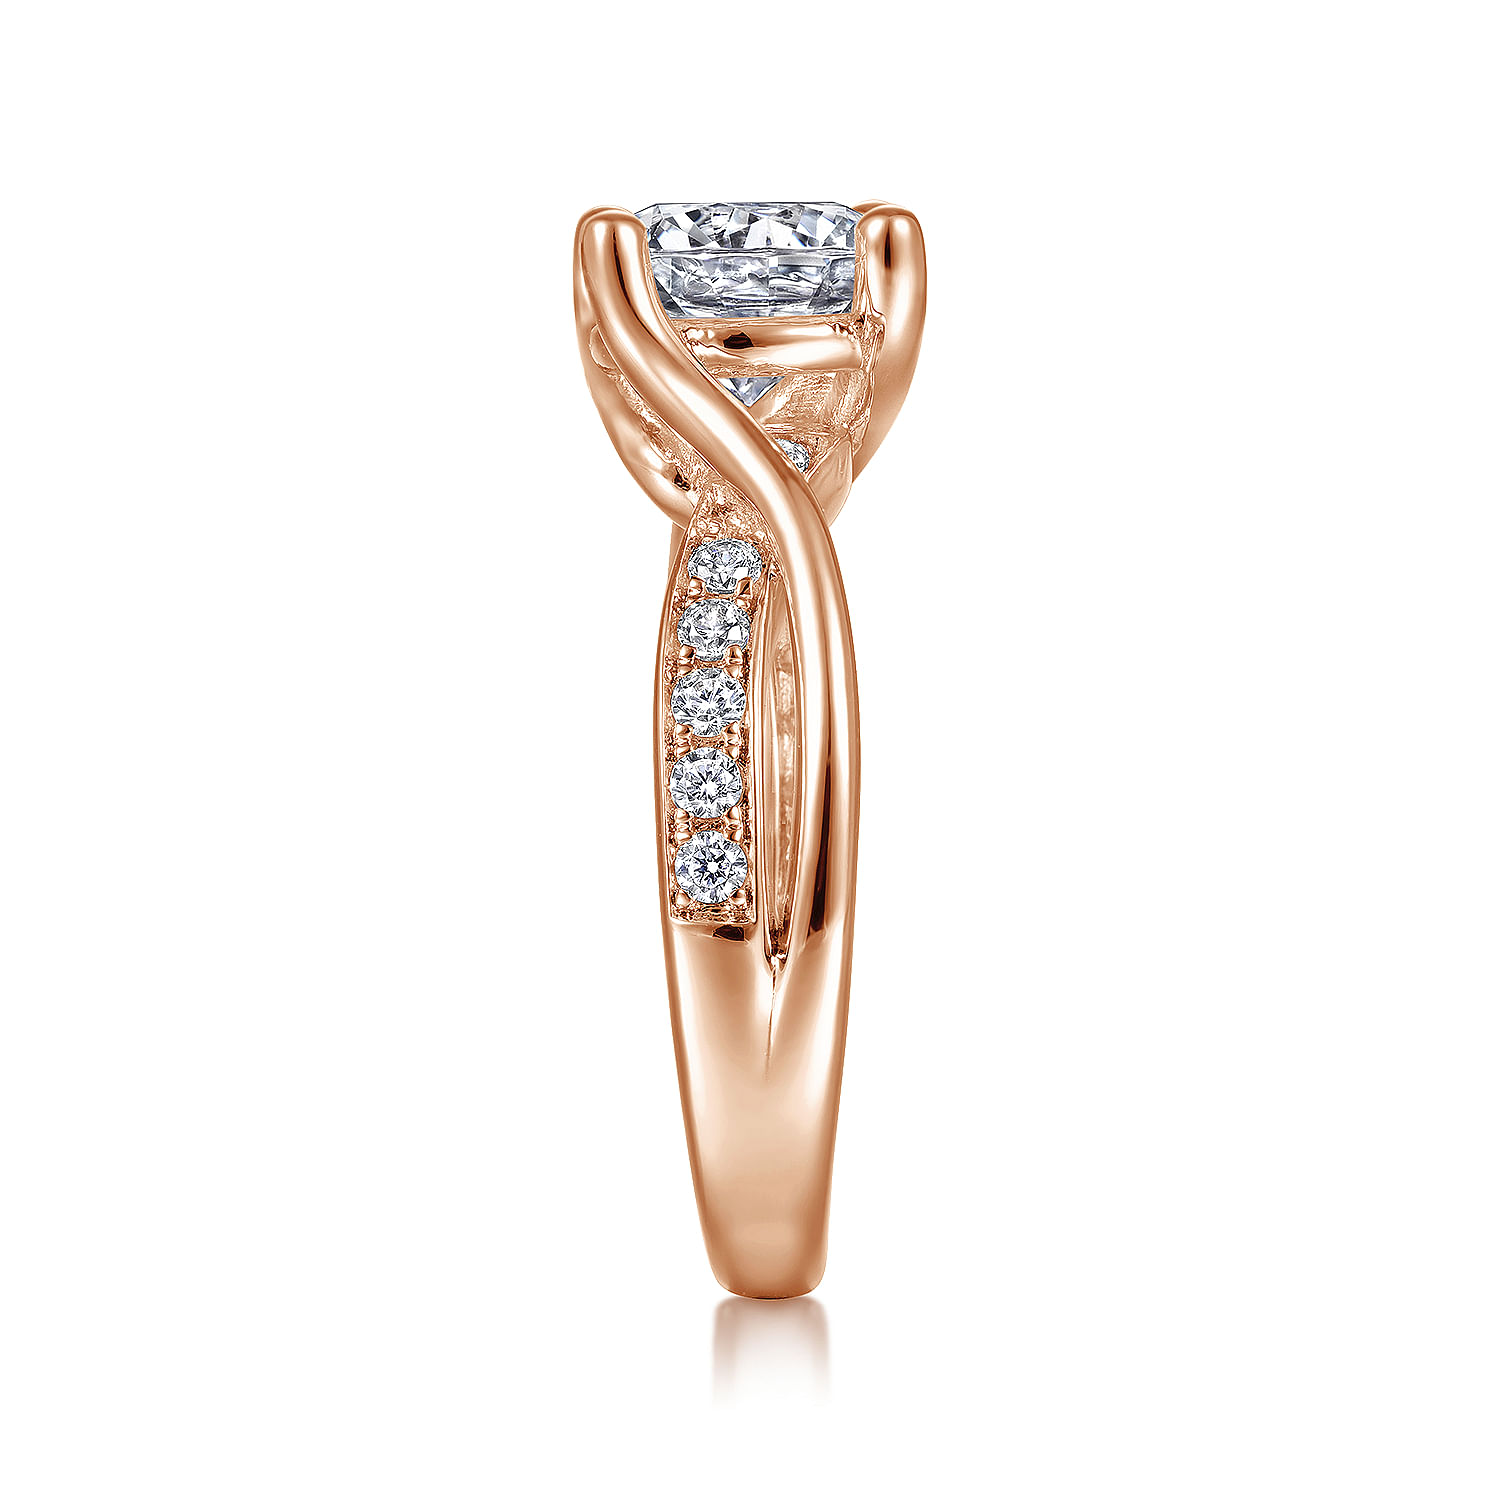 14K Rose Gold Twisted Round Diamond Engagement Ring